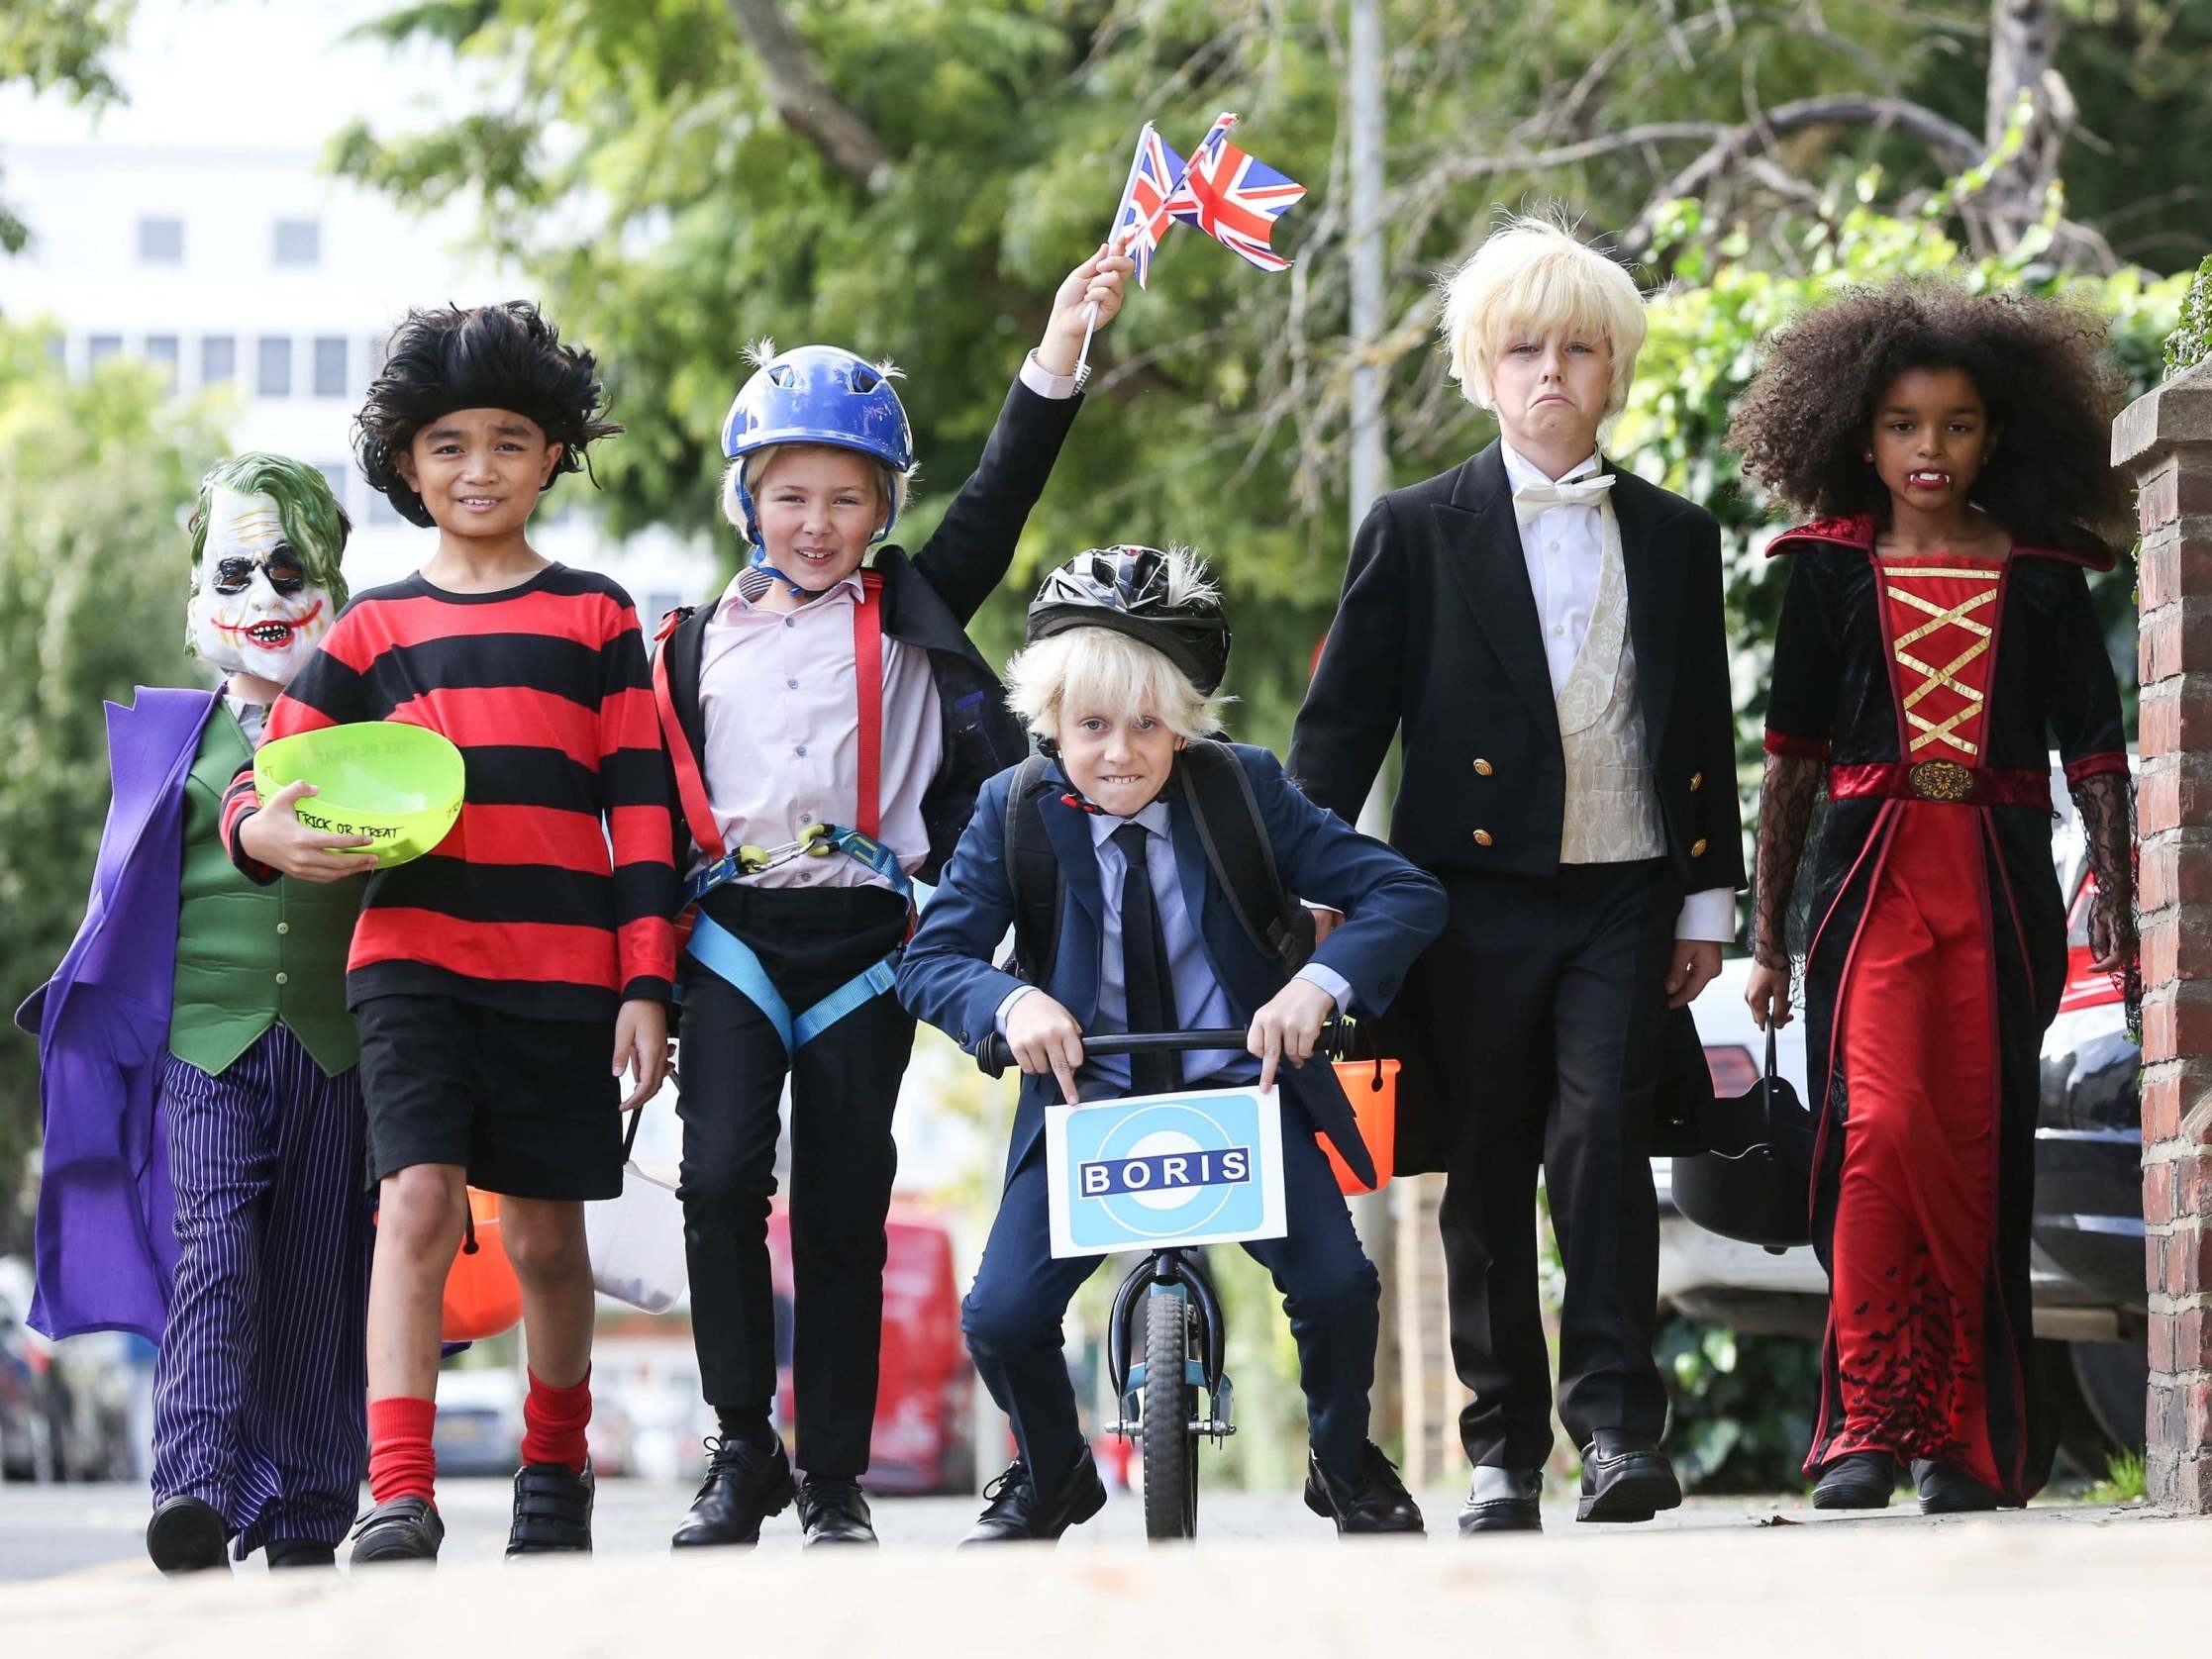 Boris Johnson, the Joker and Wonder Woman among 'most popular' children's Halloween  costumes, The Independent